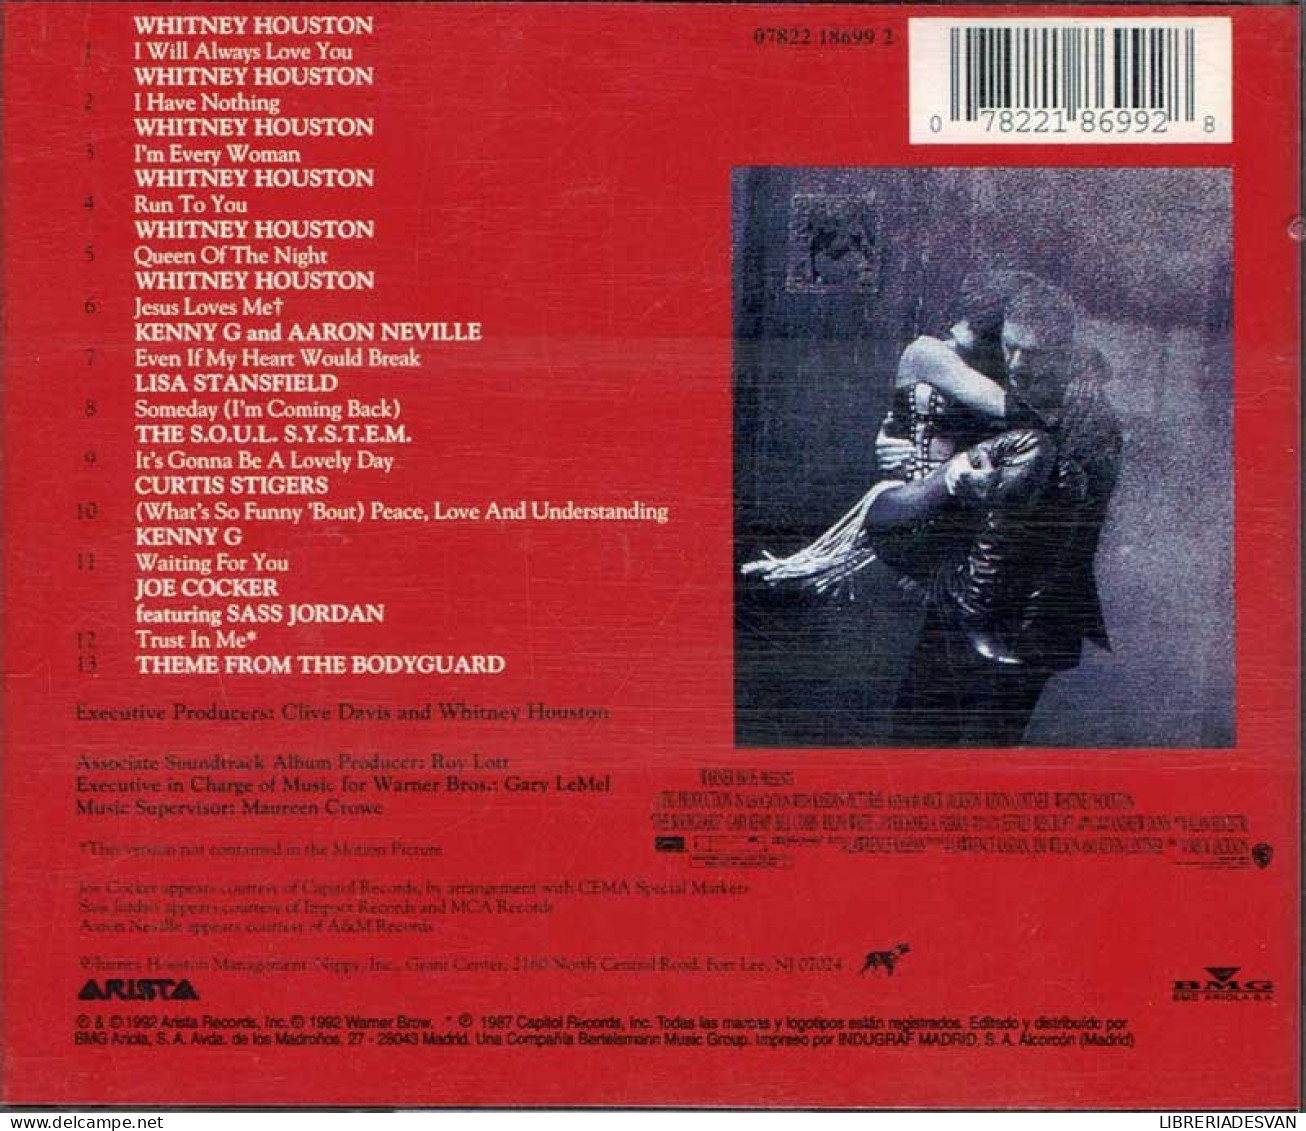 The Bodyguard (Original Soundtrack Album). CD - Filmmusik